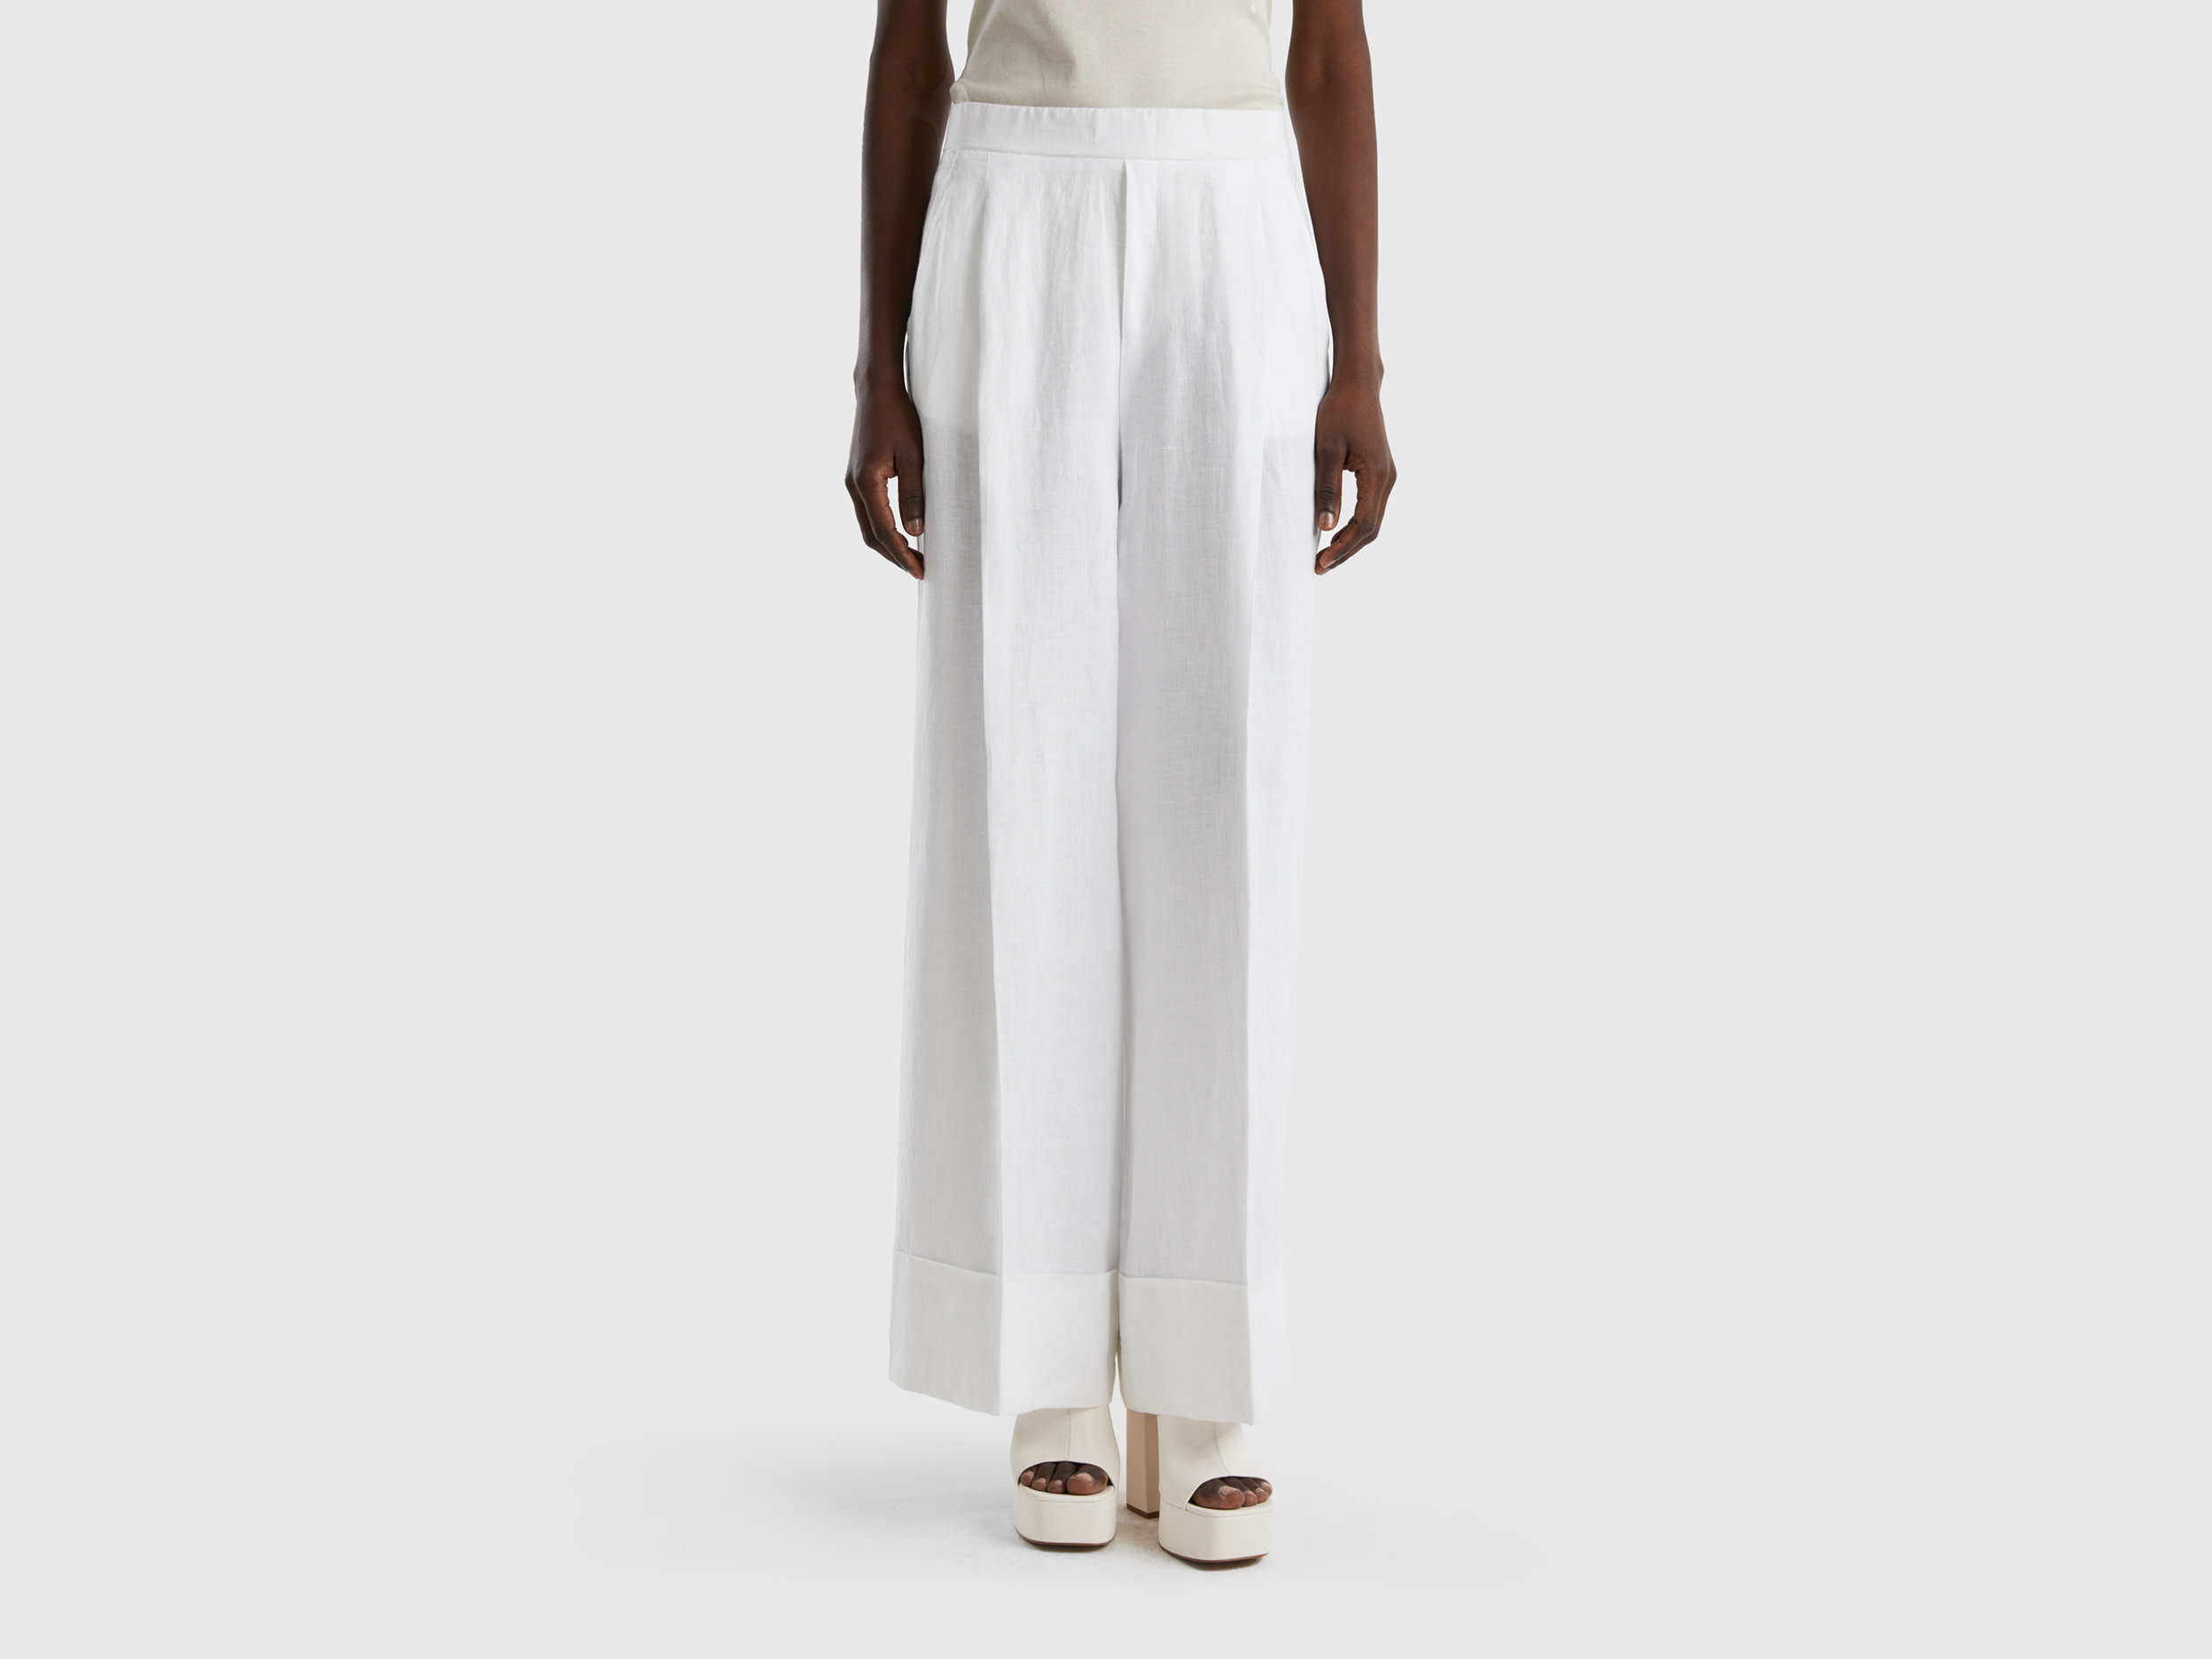 Benetton, Palazzo Trousers In 100% Linen, size L, White, Women